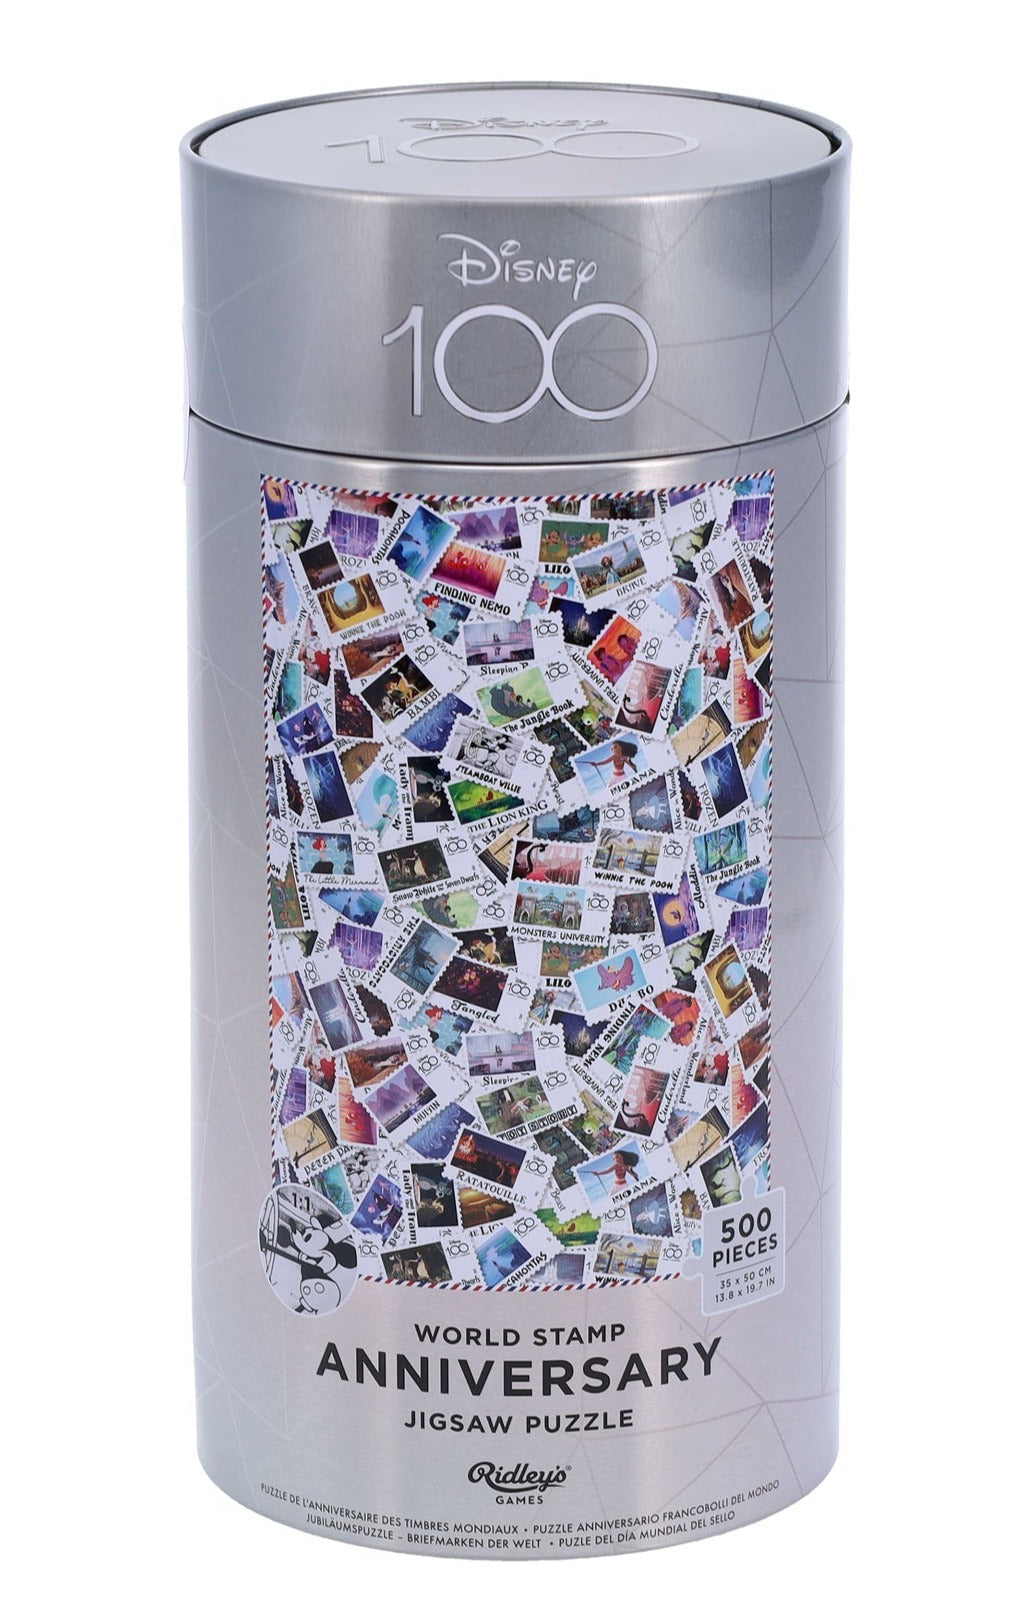 Disney 100 World Stamp Anniversary Jigsaw Puzzle